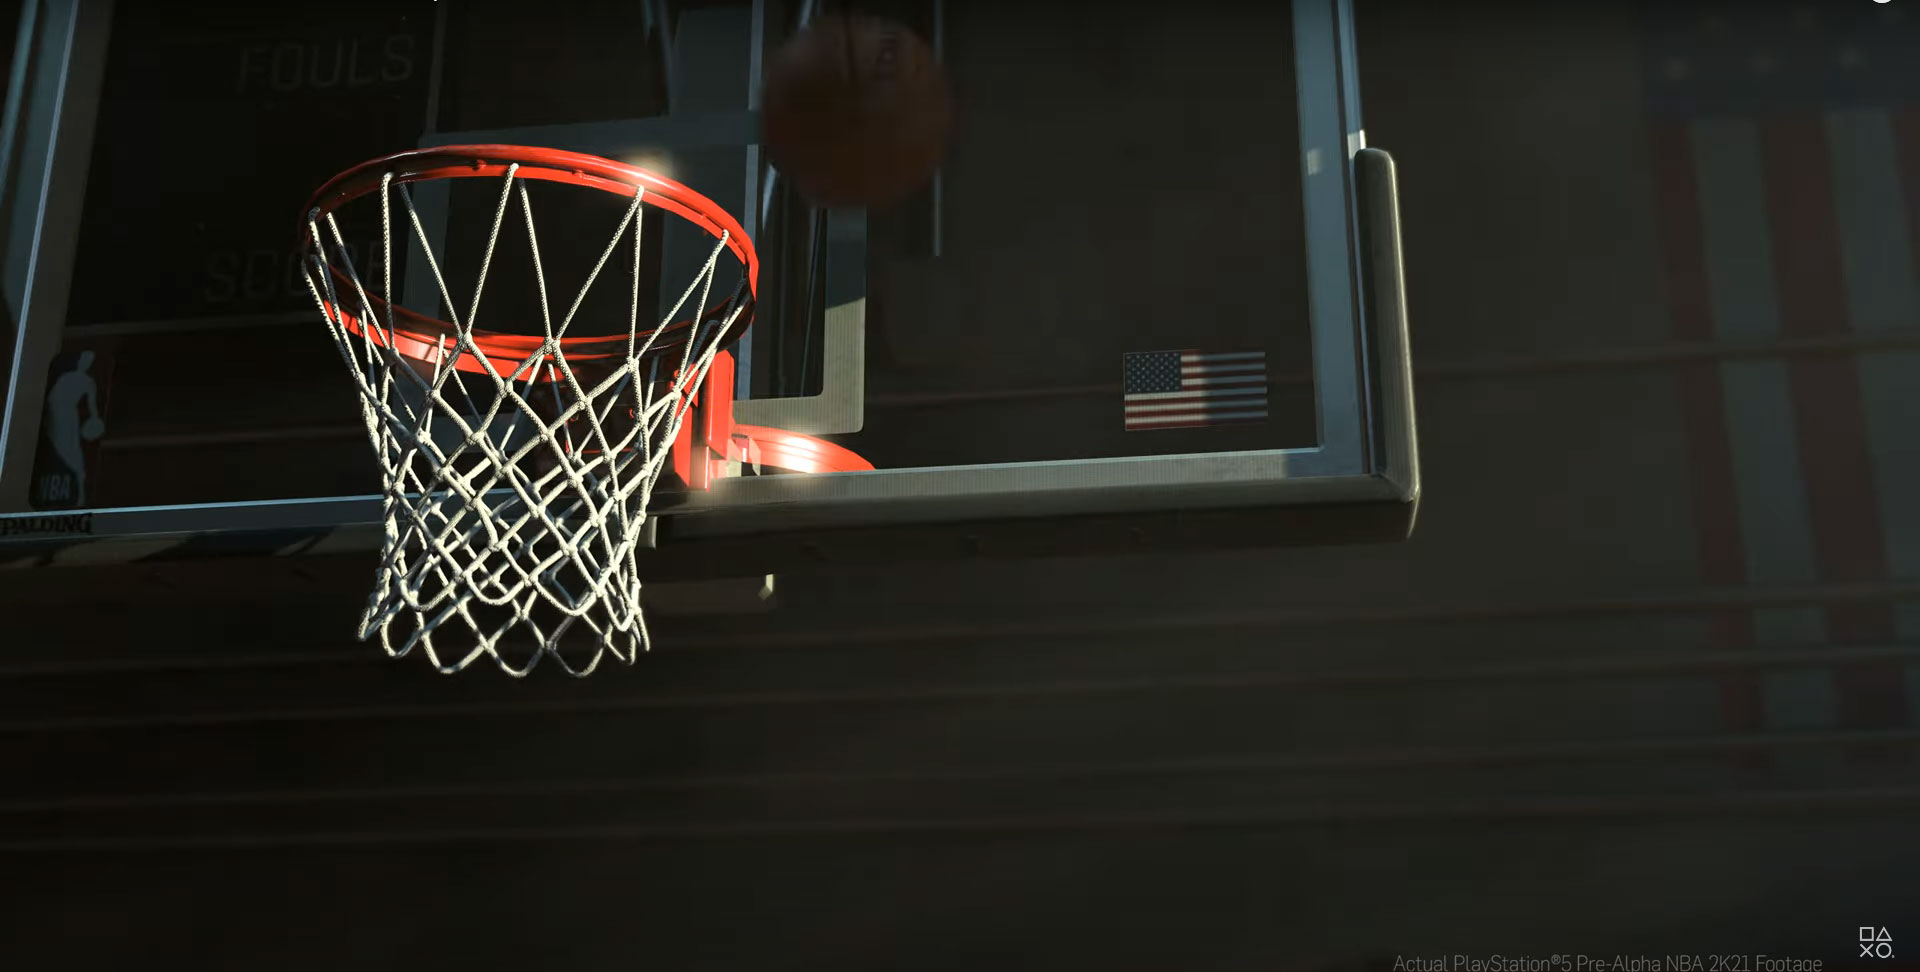 Nba 2k21 Revealed Amazing Graphics Teaser Trailer Screenshots